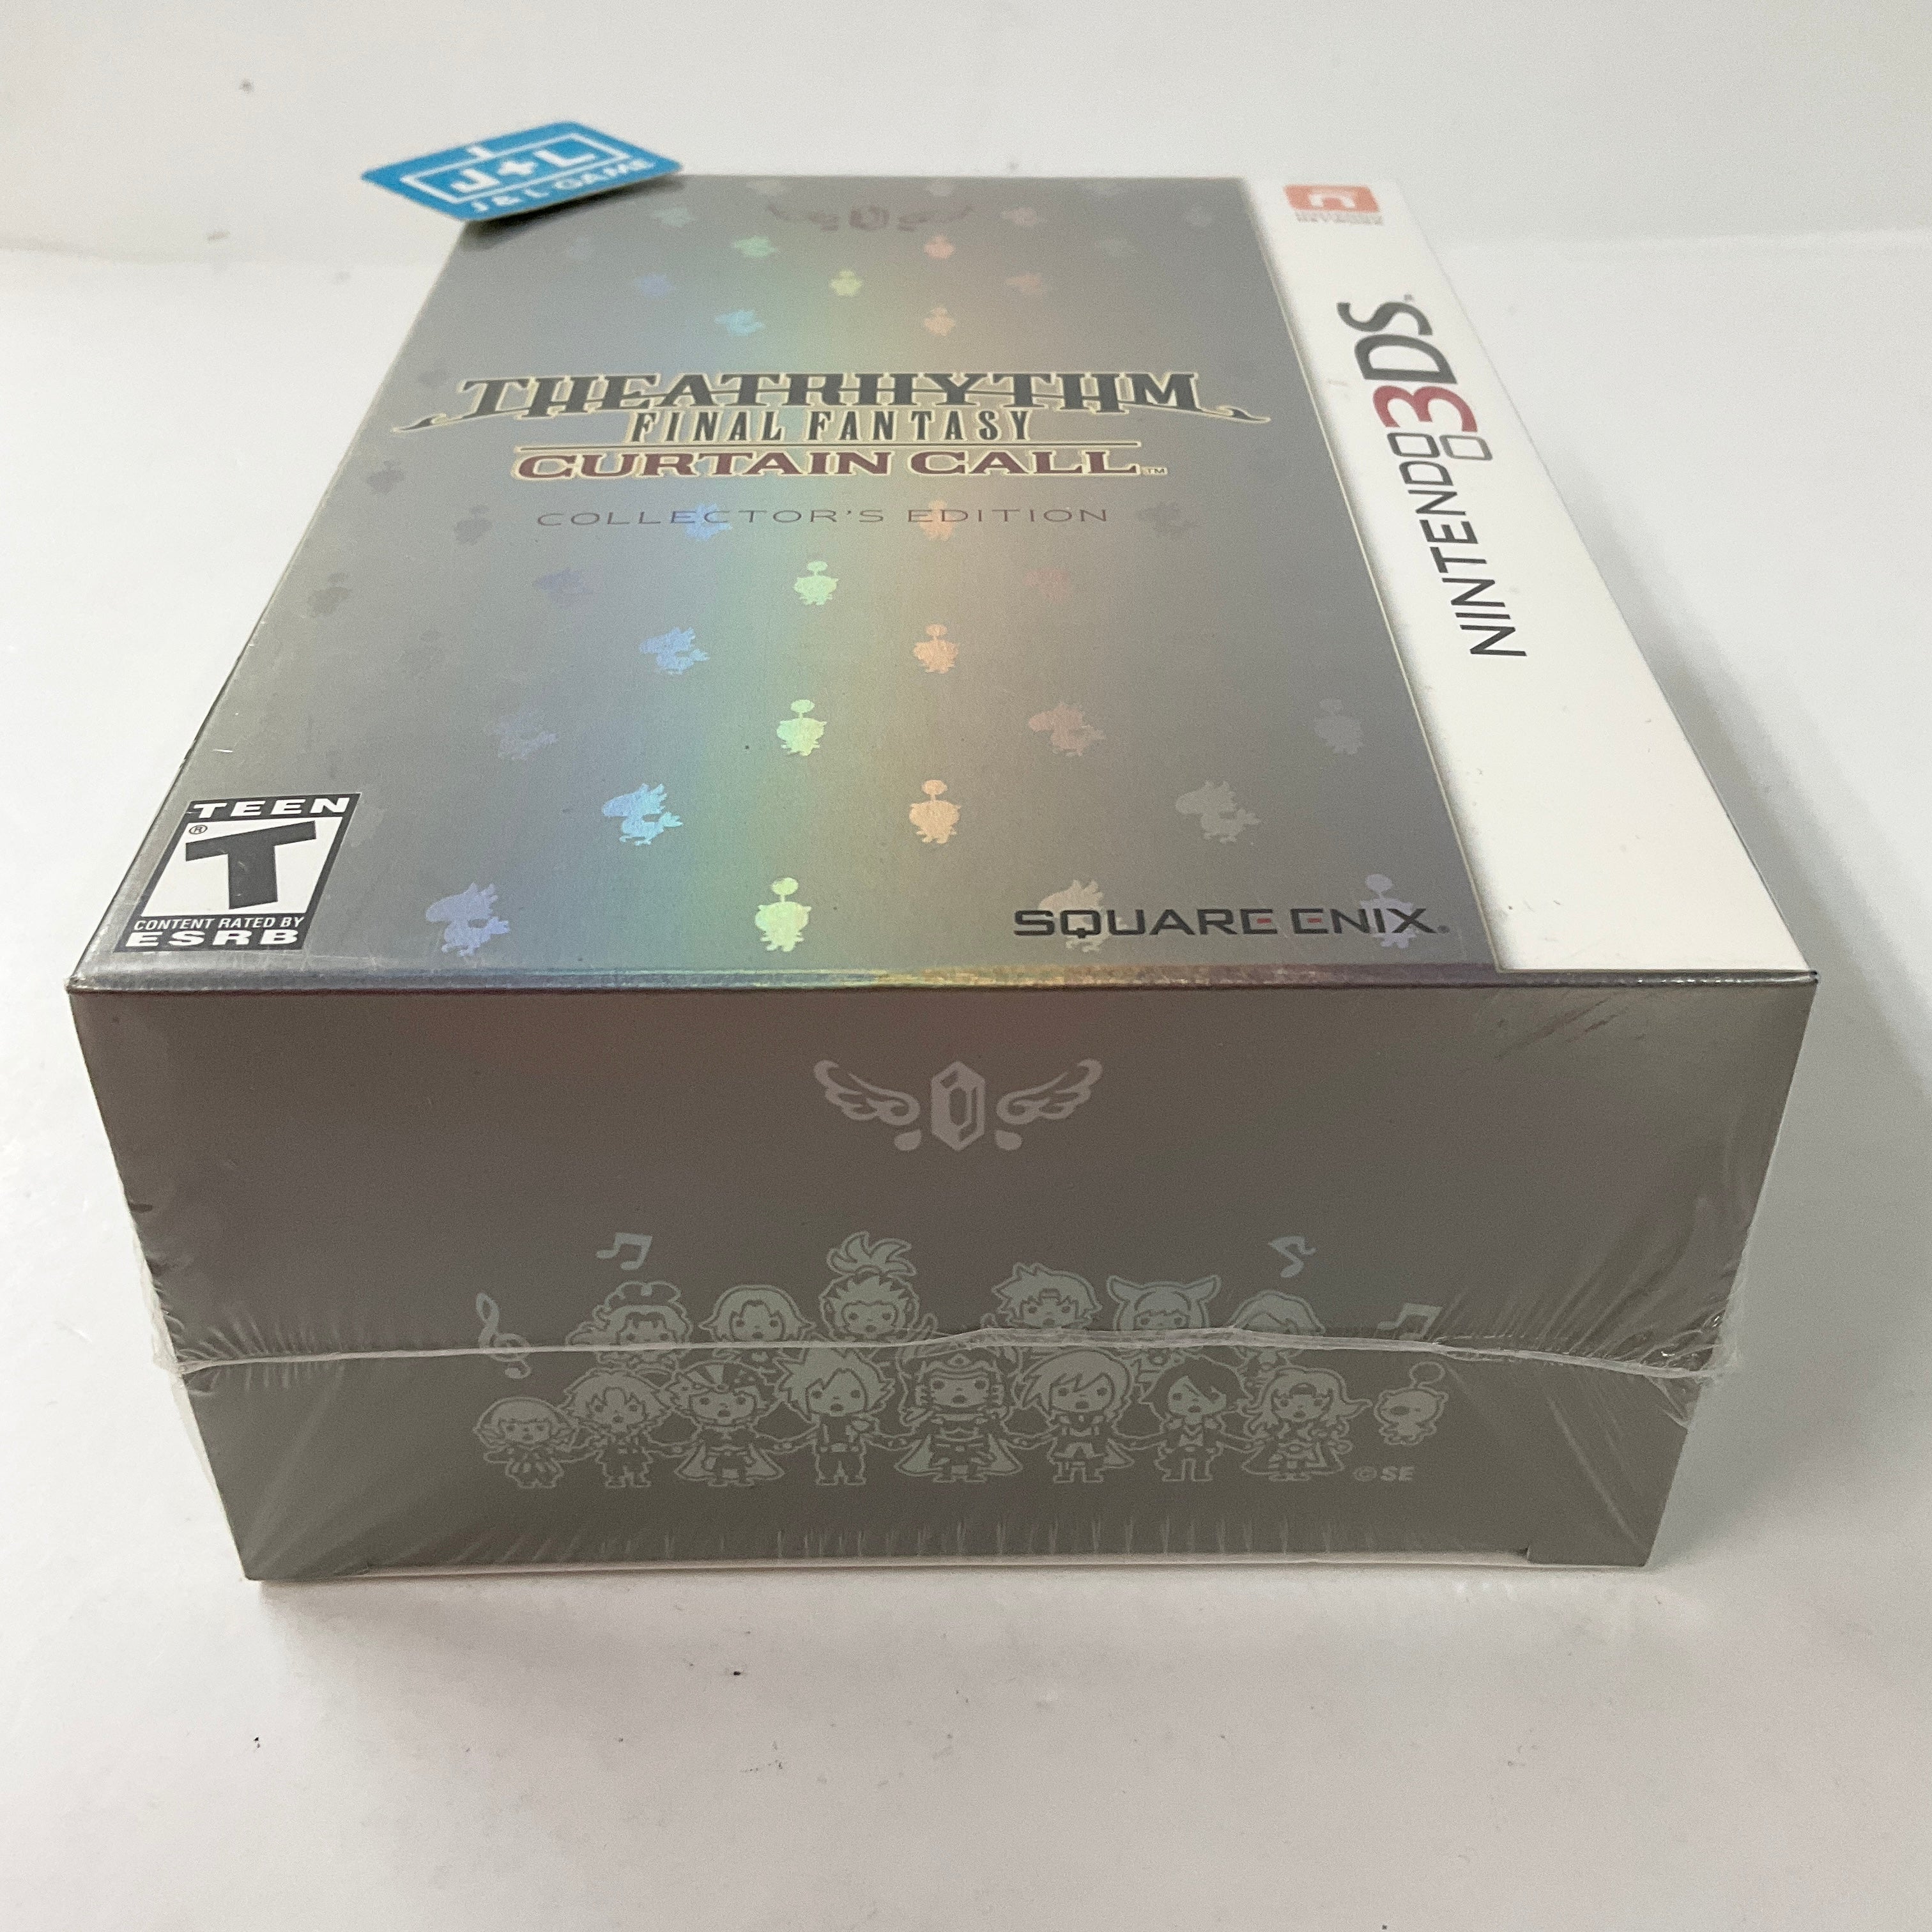 Theatrhythm Final Fantasy Curtain Call Collector's Edition - Nintendo 3DS Video Games Square Enix   